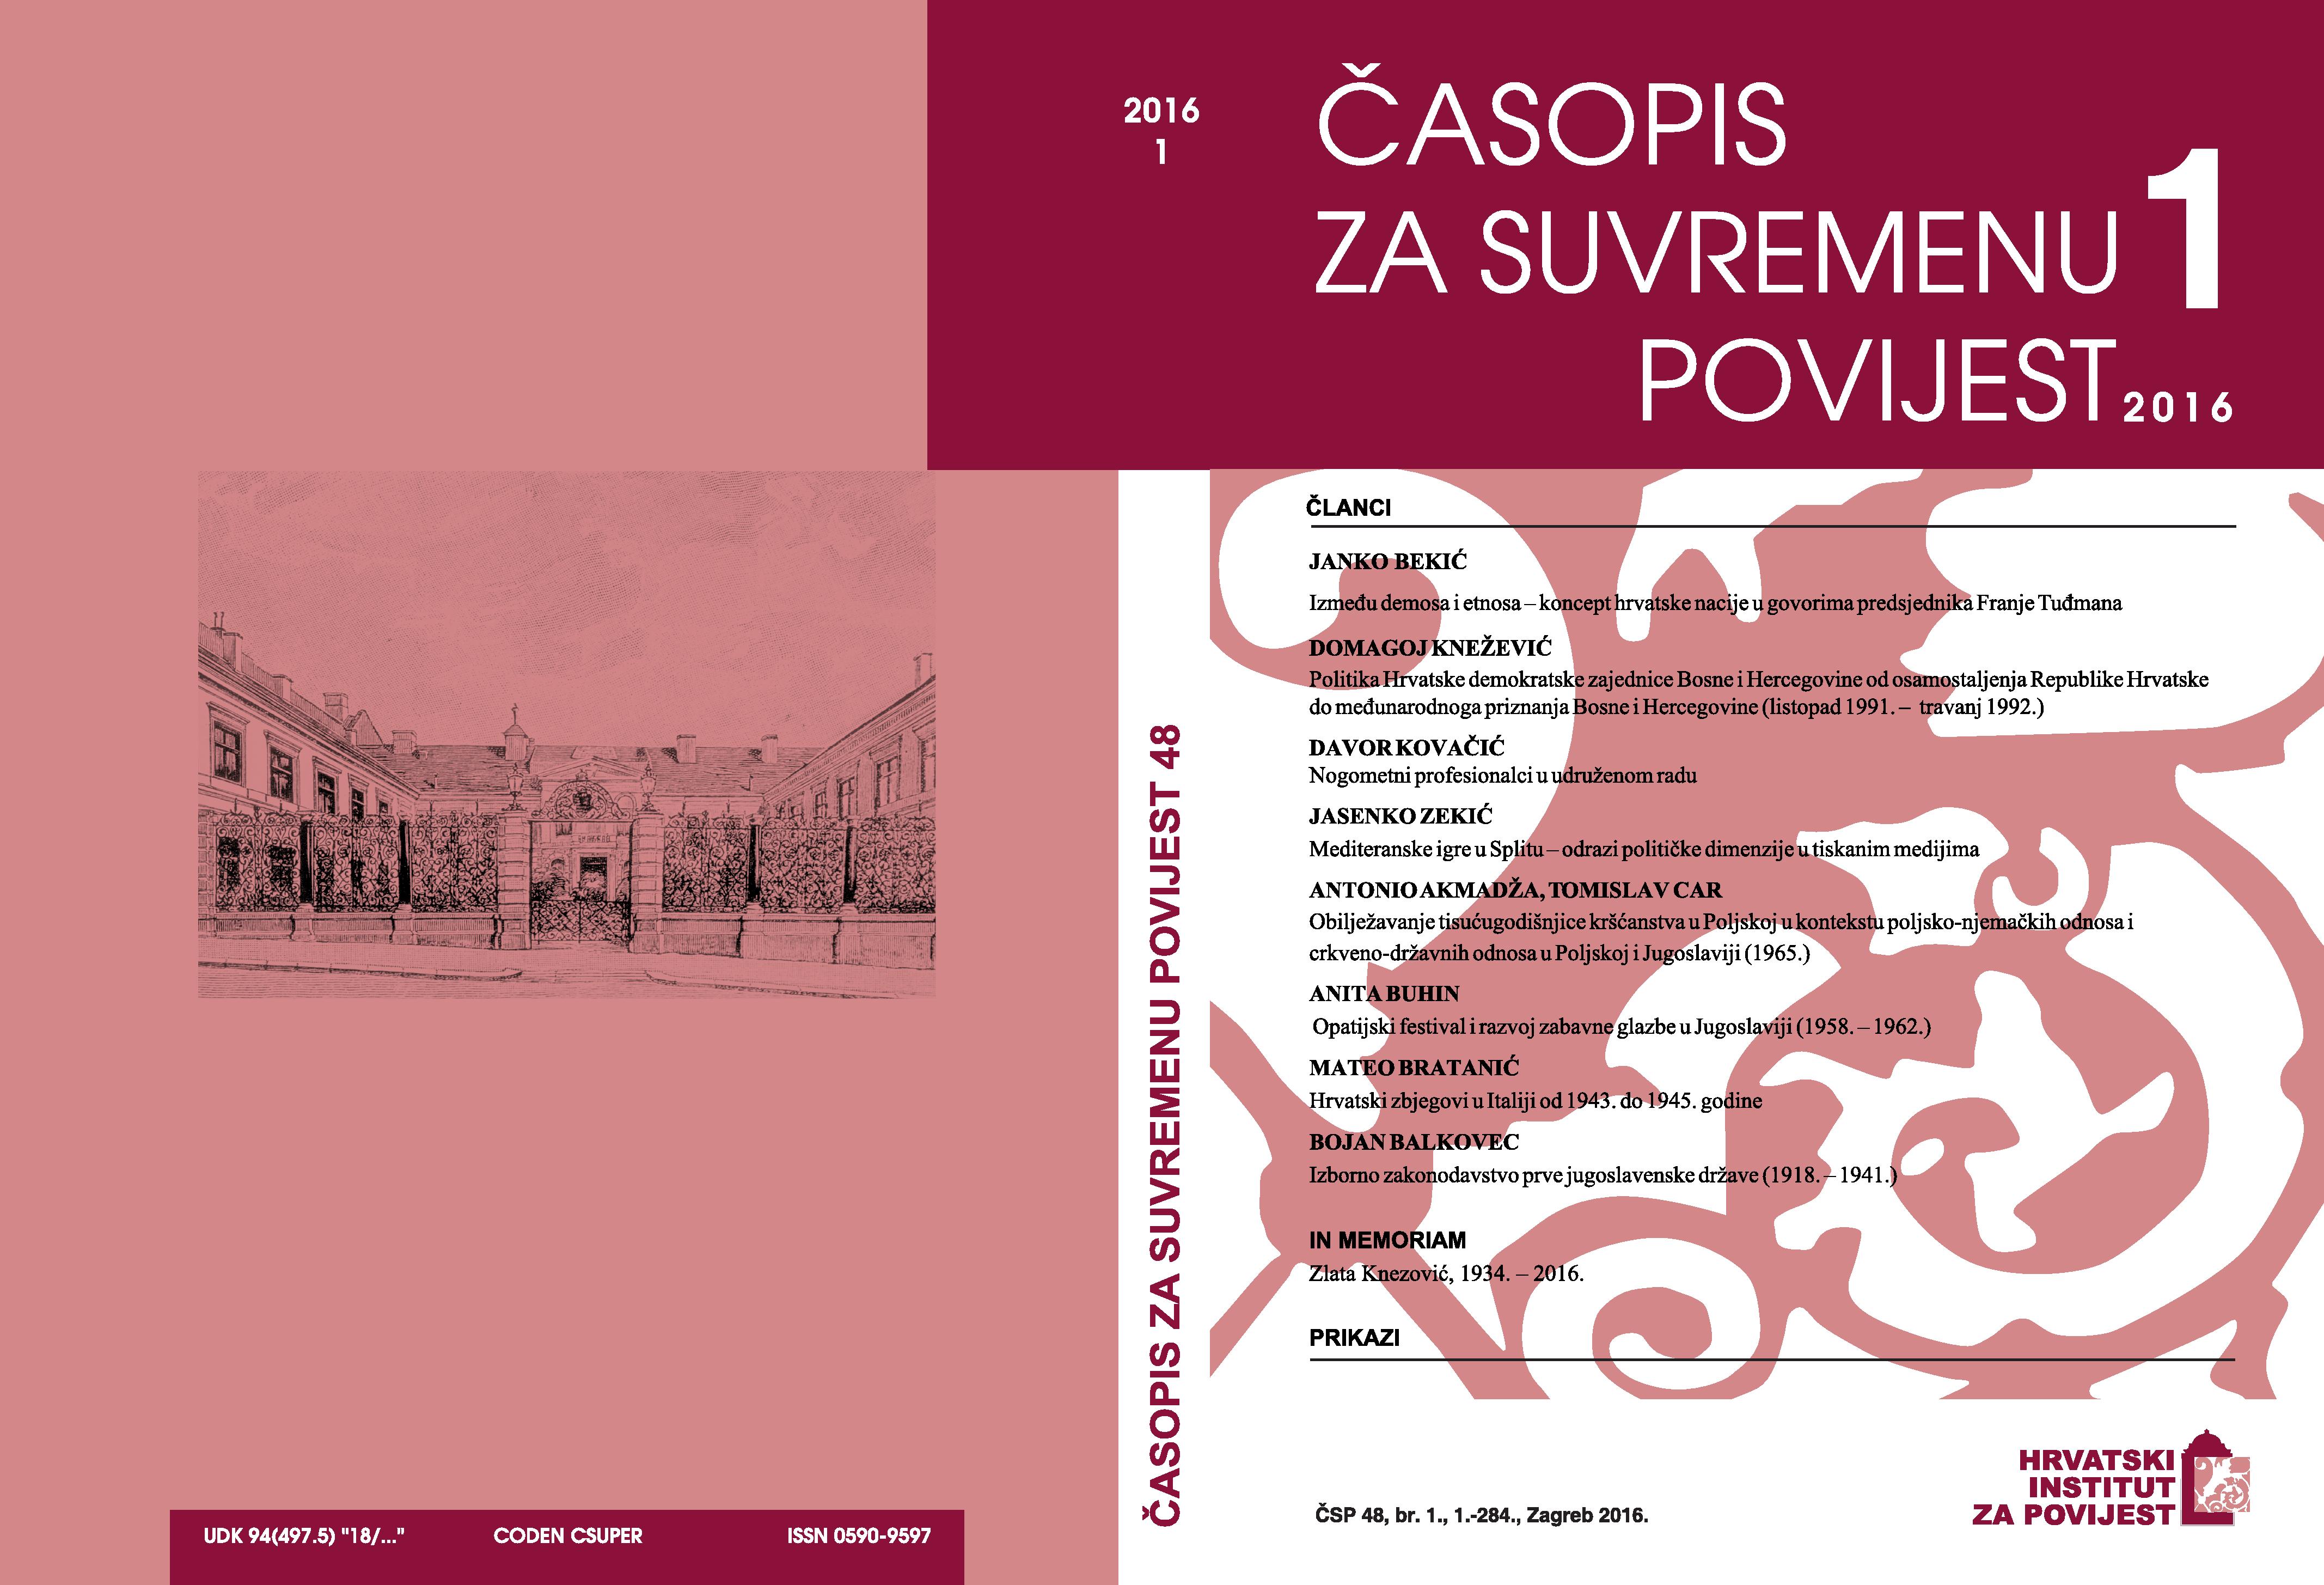 In memoriam: Zlata Knezović (1934. – 2016.) Cover Image